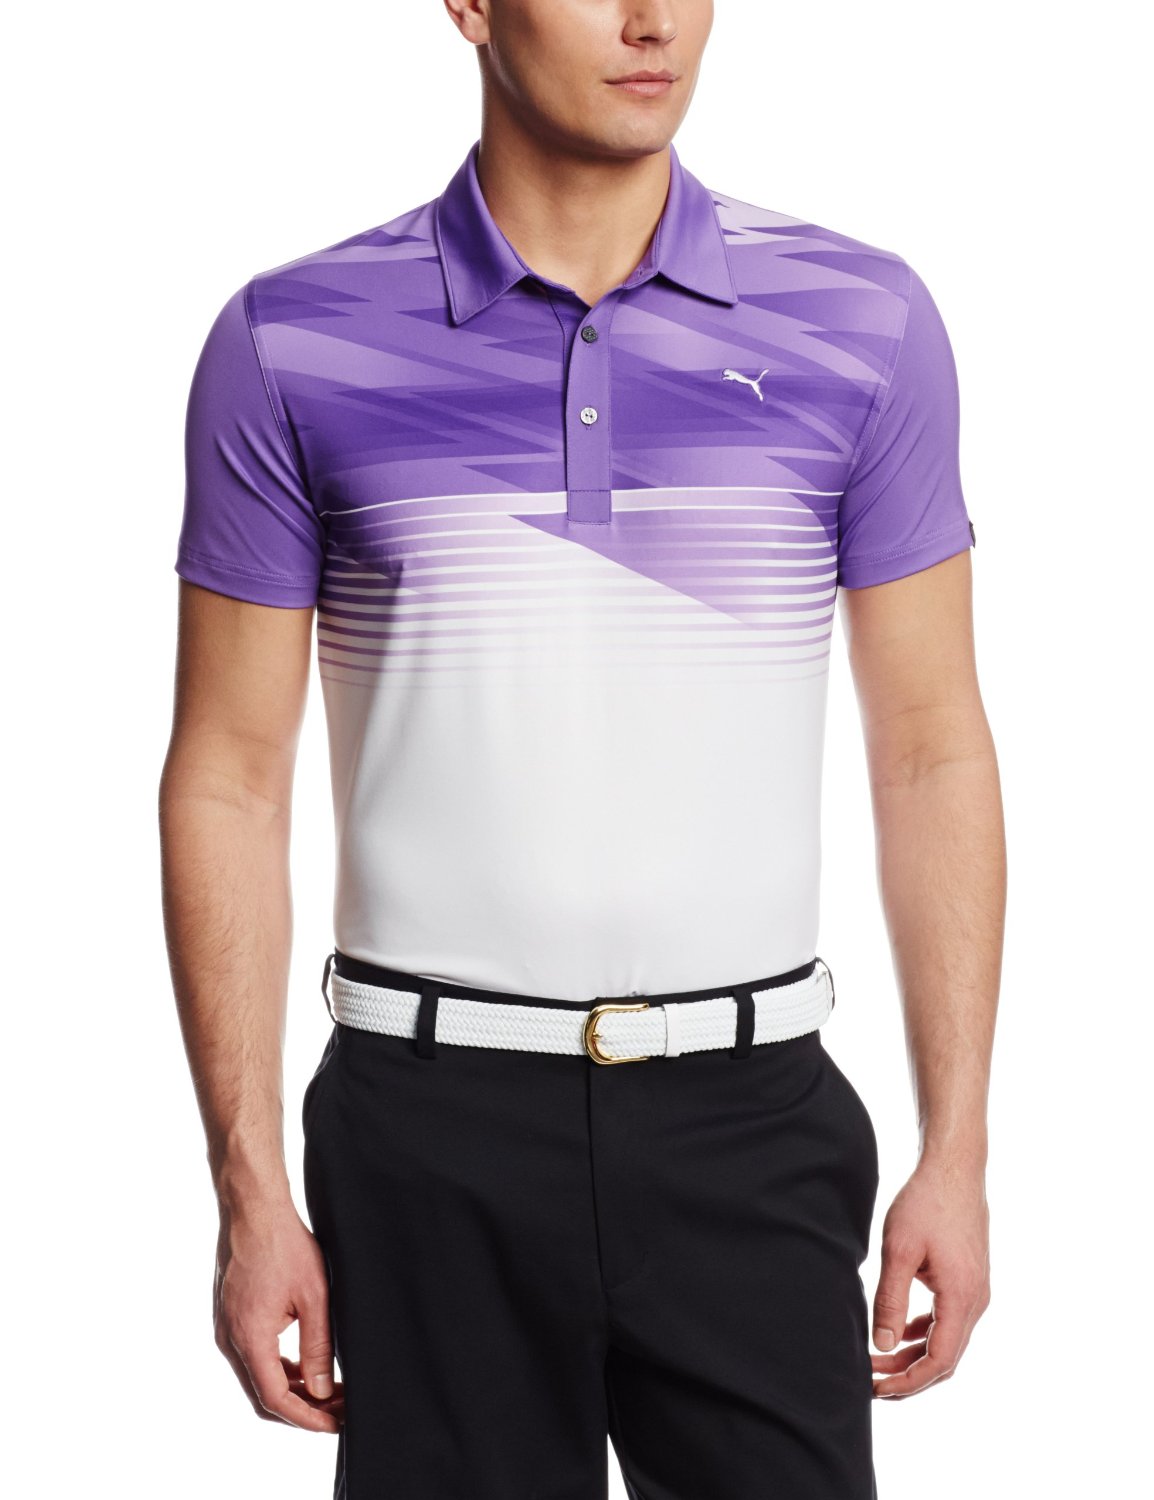 Puma Mens Golf Shirts